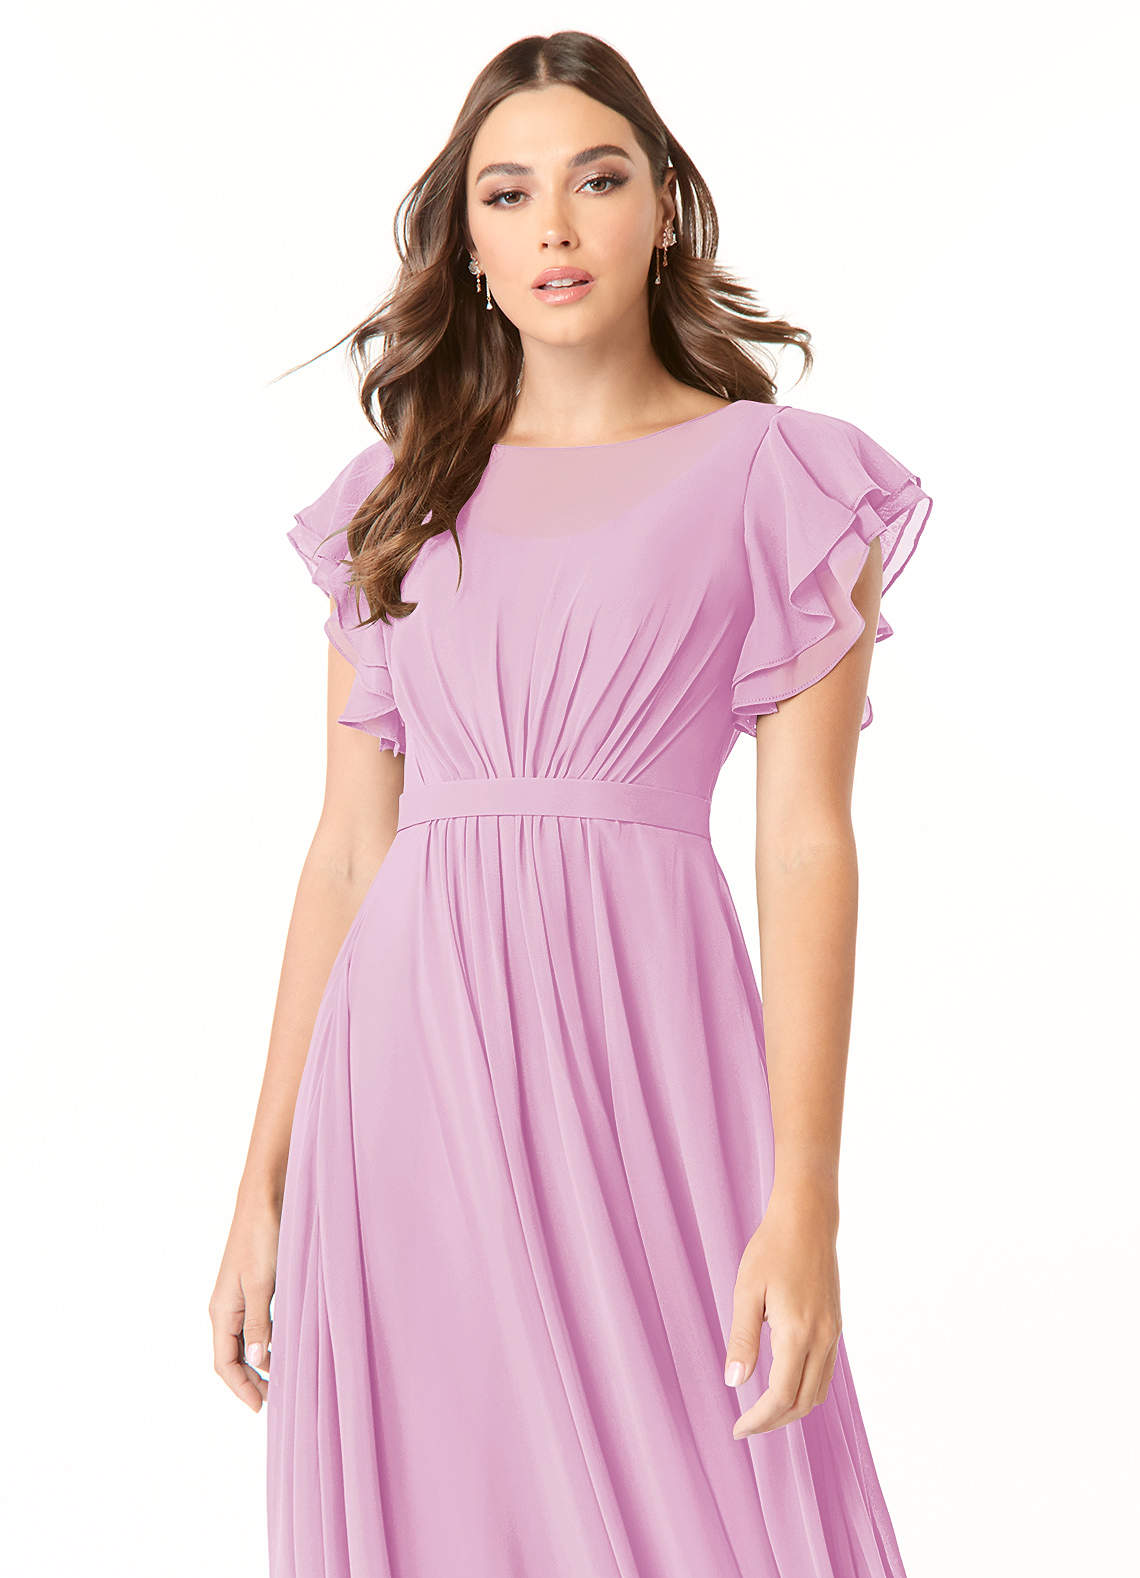 Azazie Daphne Modest Bridesmaid Dresses A-Line Ruffled Chiffon Floor-Length Dress image1